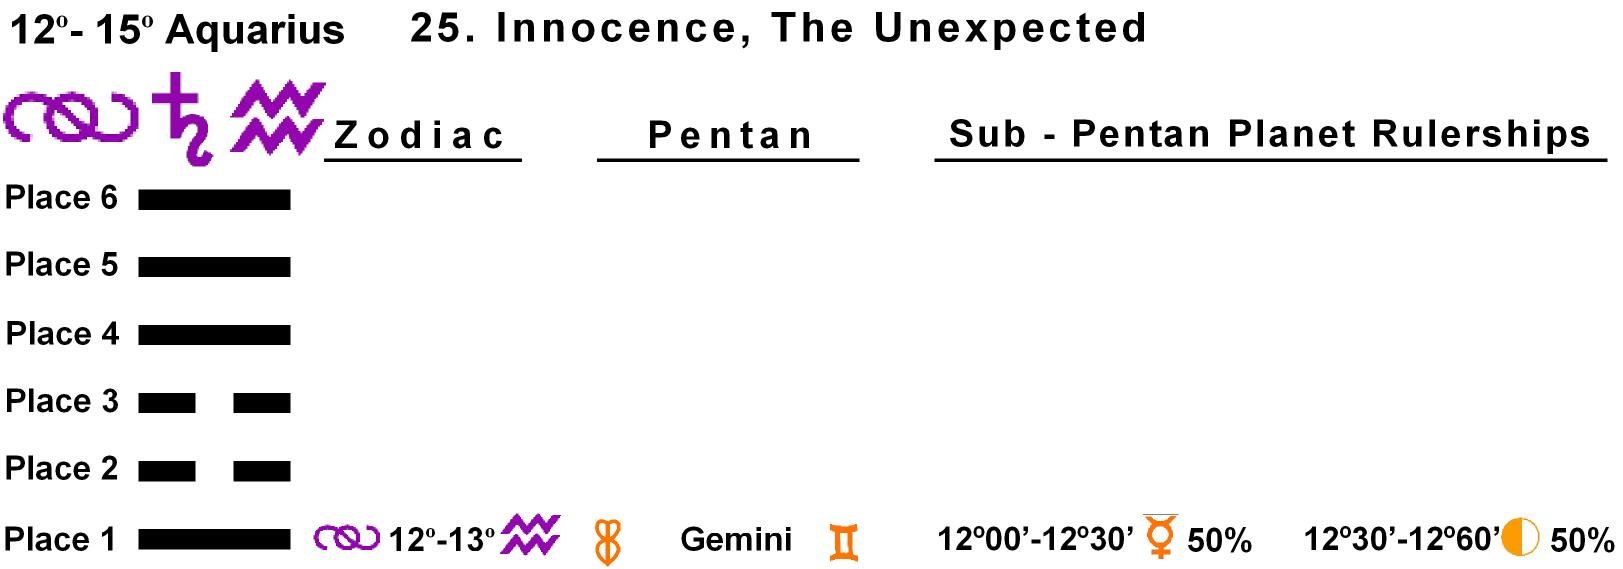 Pent-lines-11AQ 12-13 Hx-25. Innocence